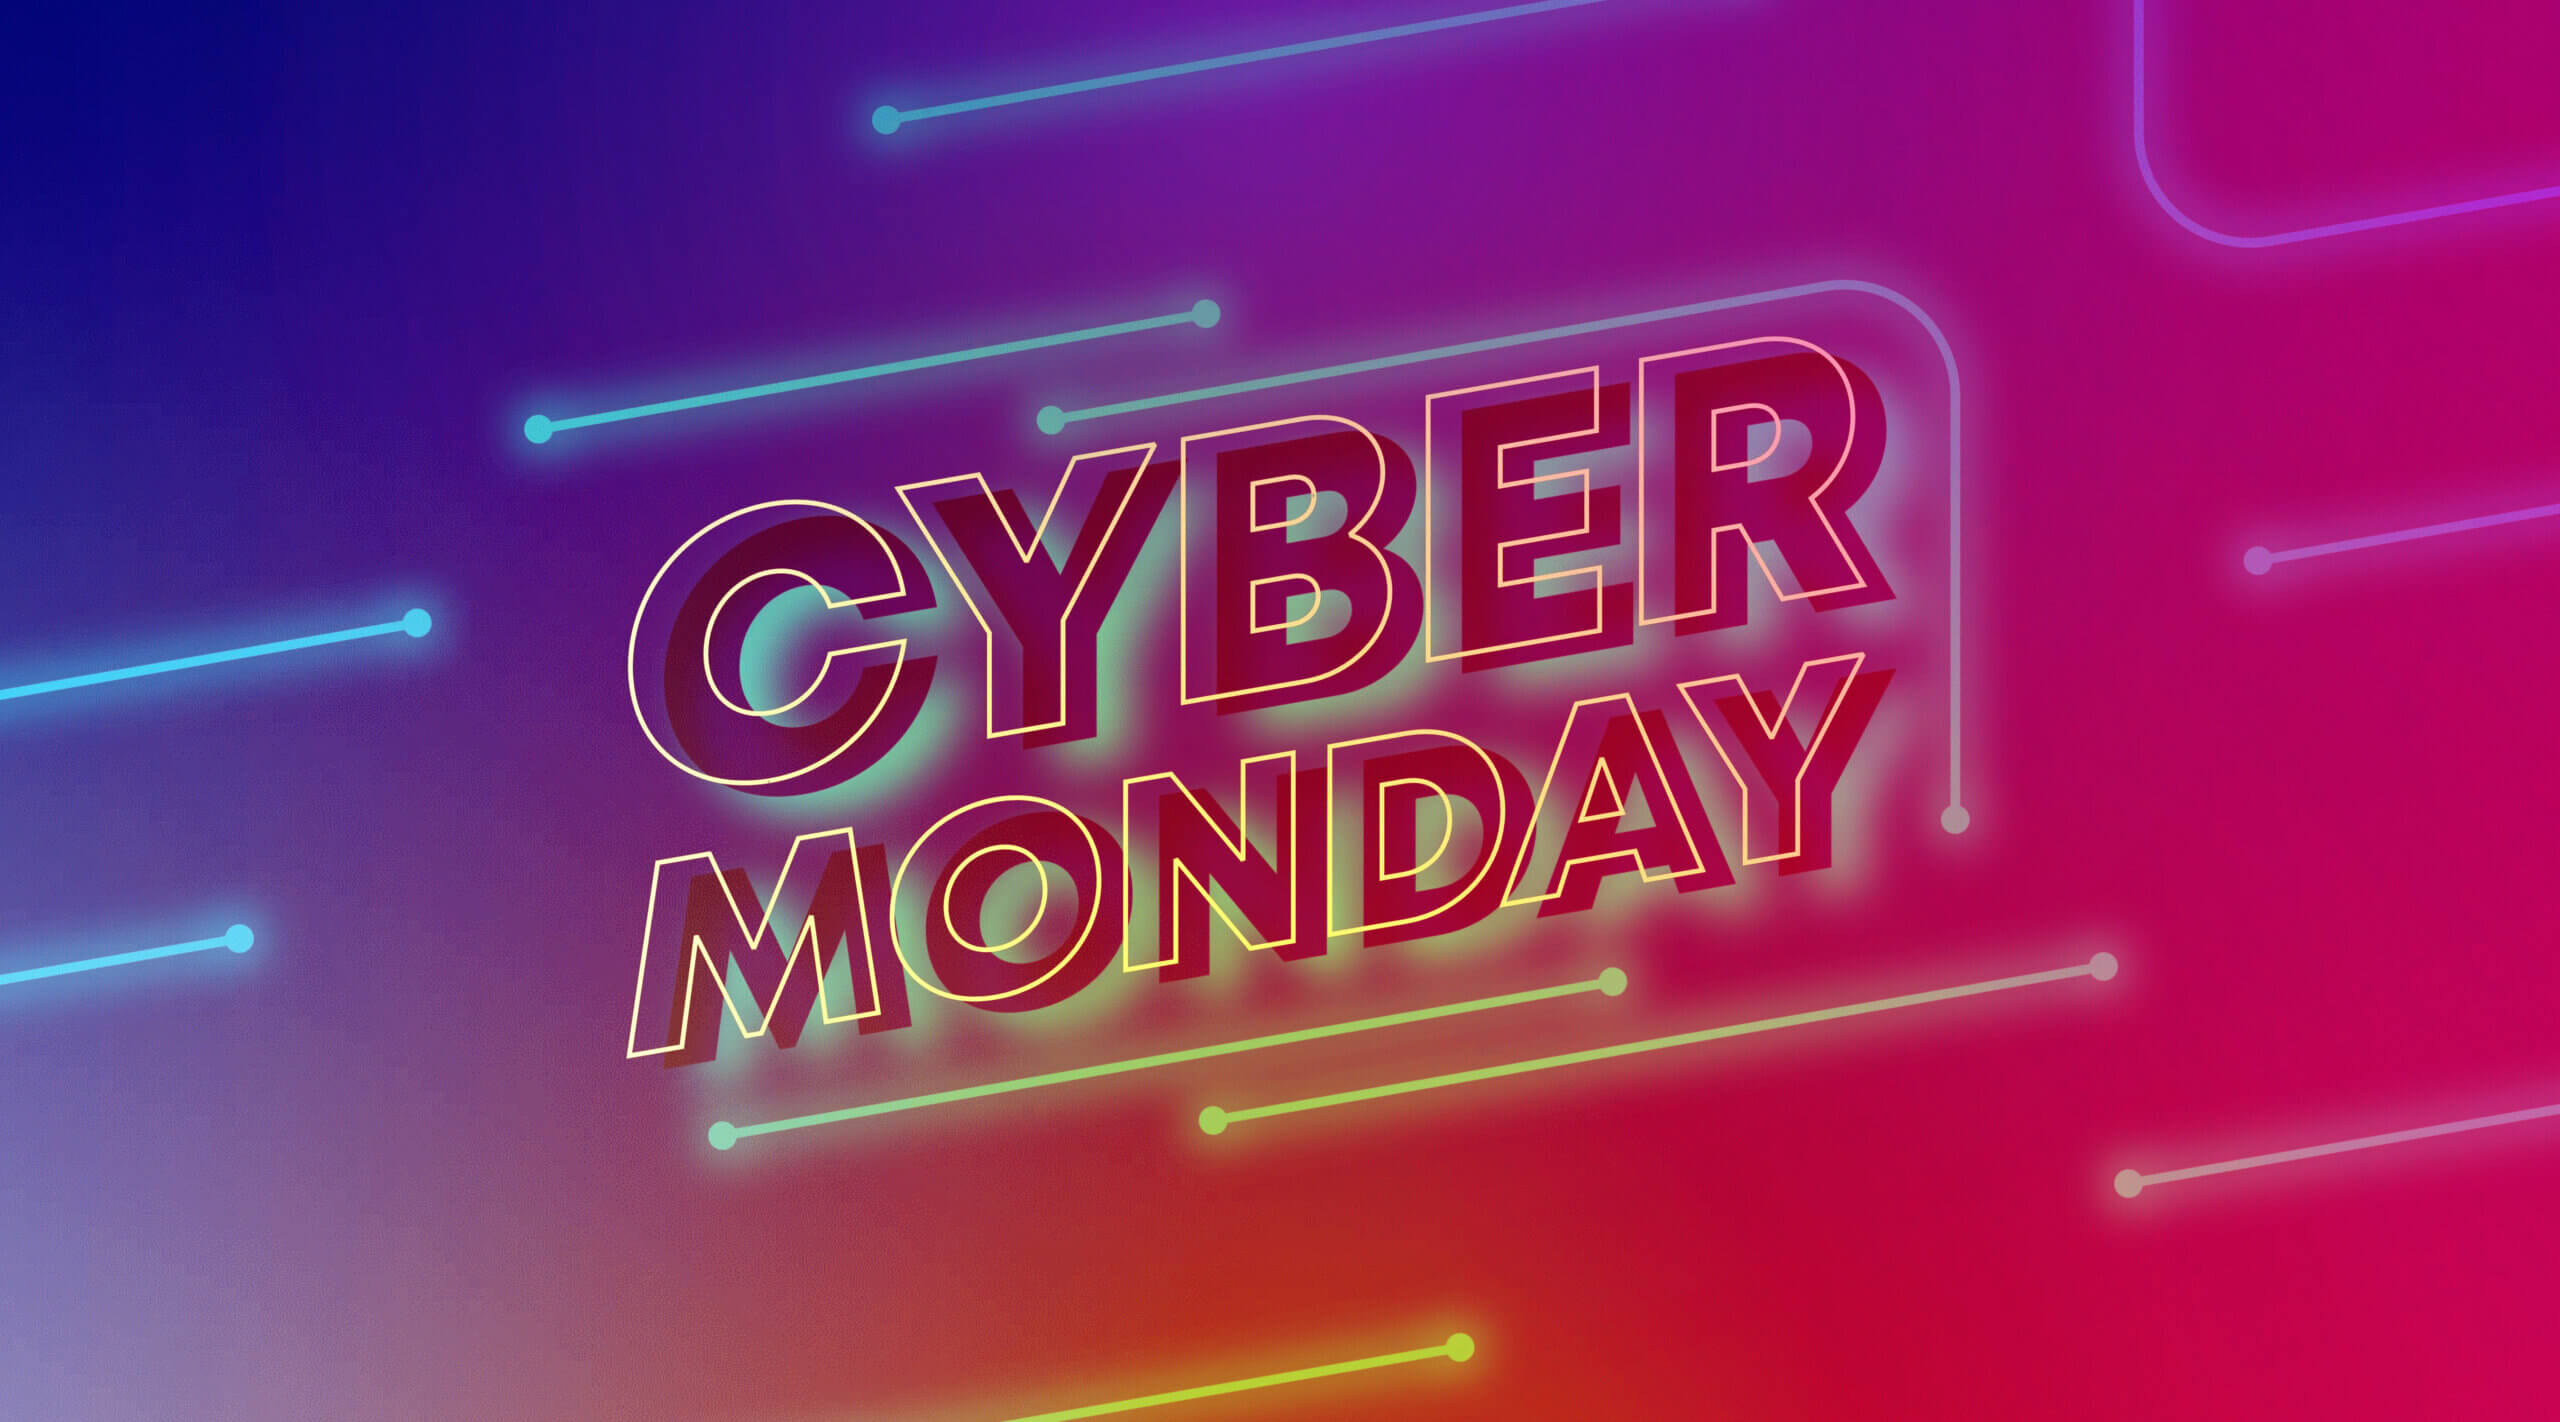 Cyber Monday concept art